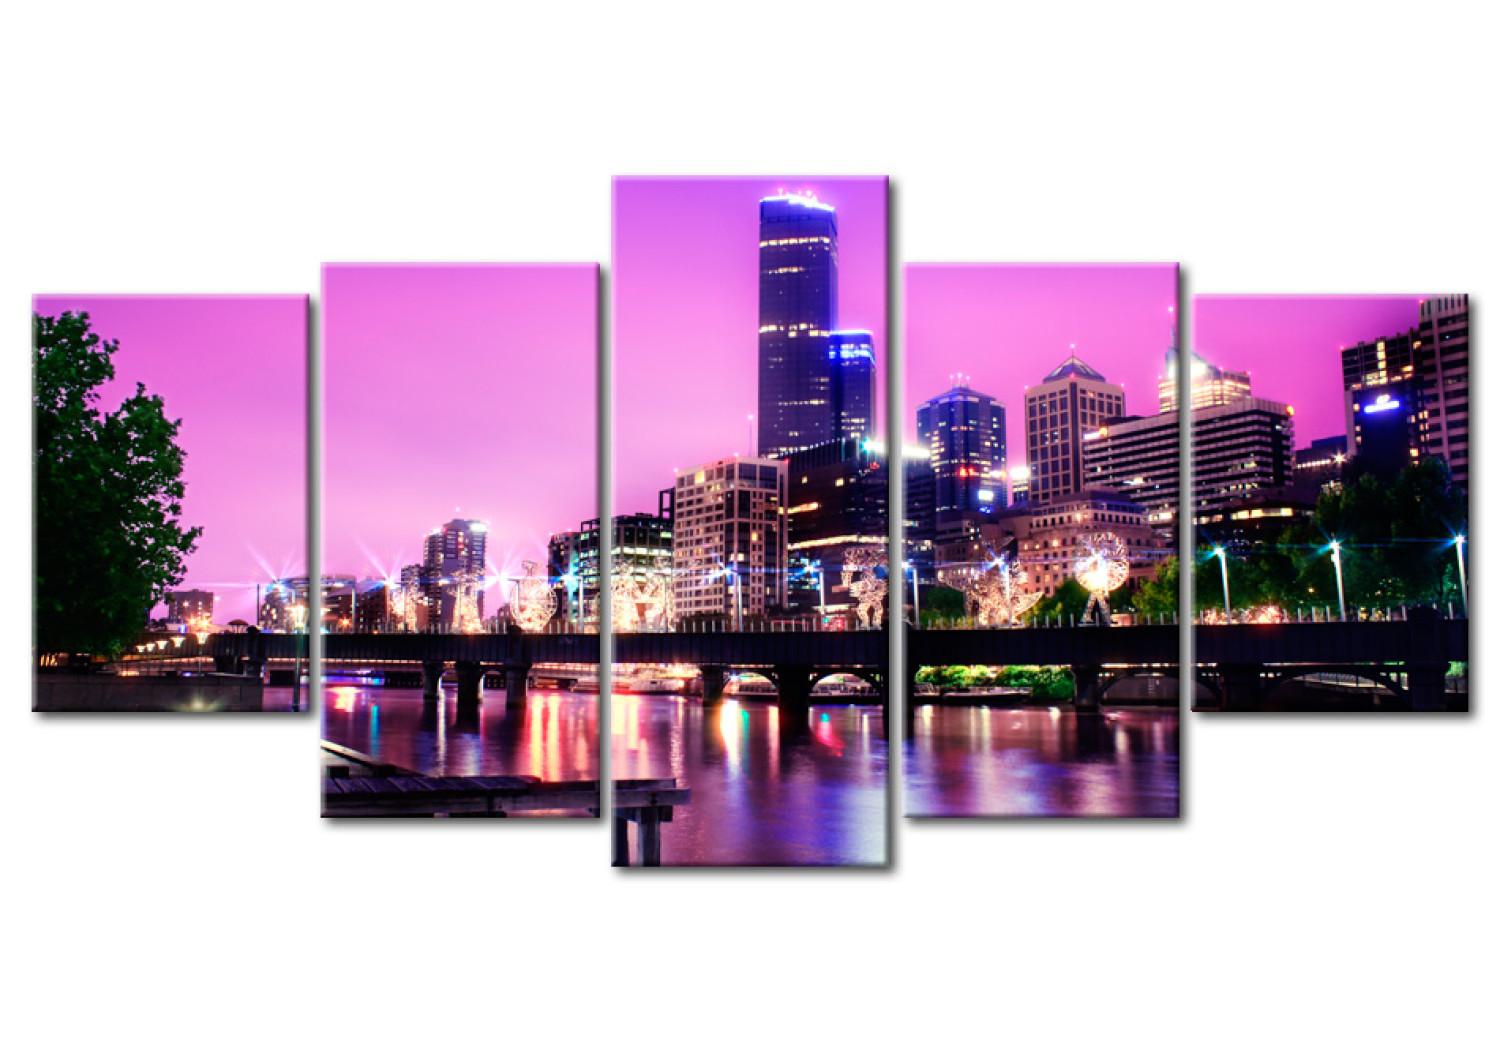 Cuadro Night urban city skyline - Melbourne